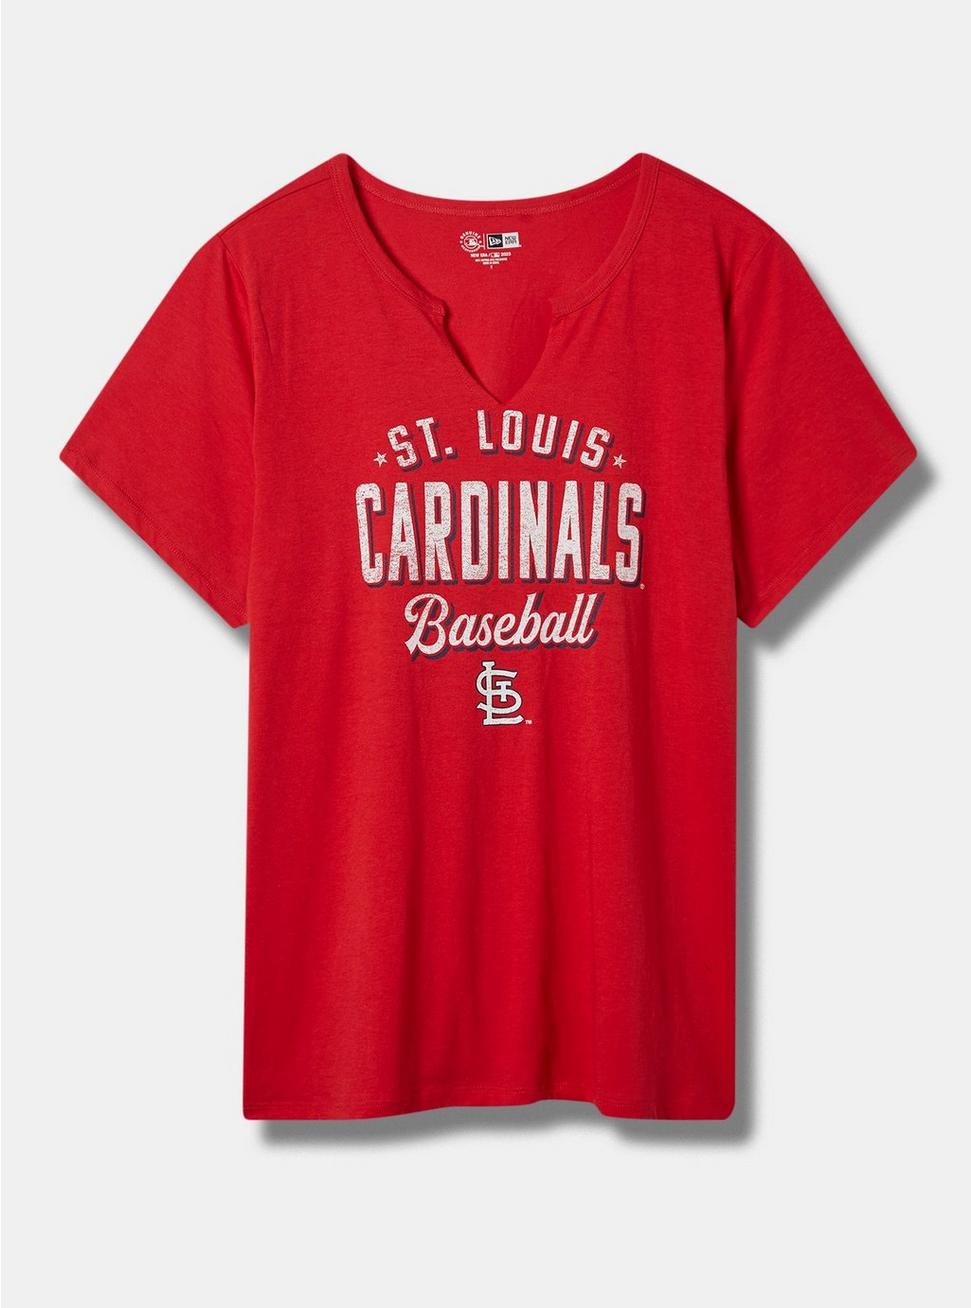 women's plus size cardinals shirts